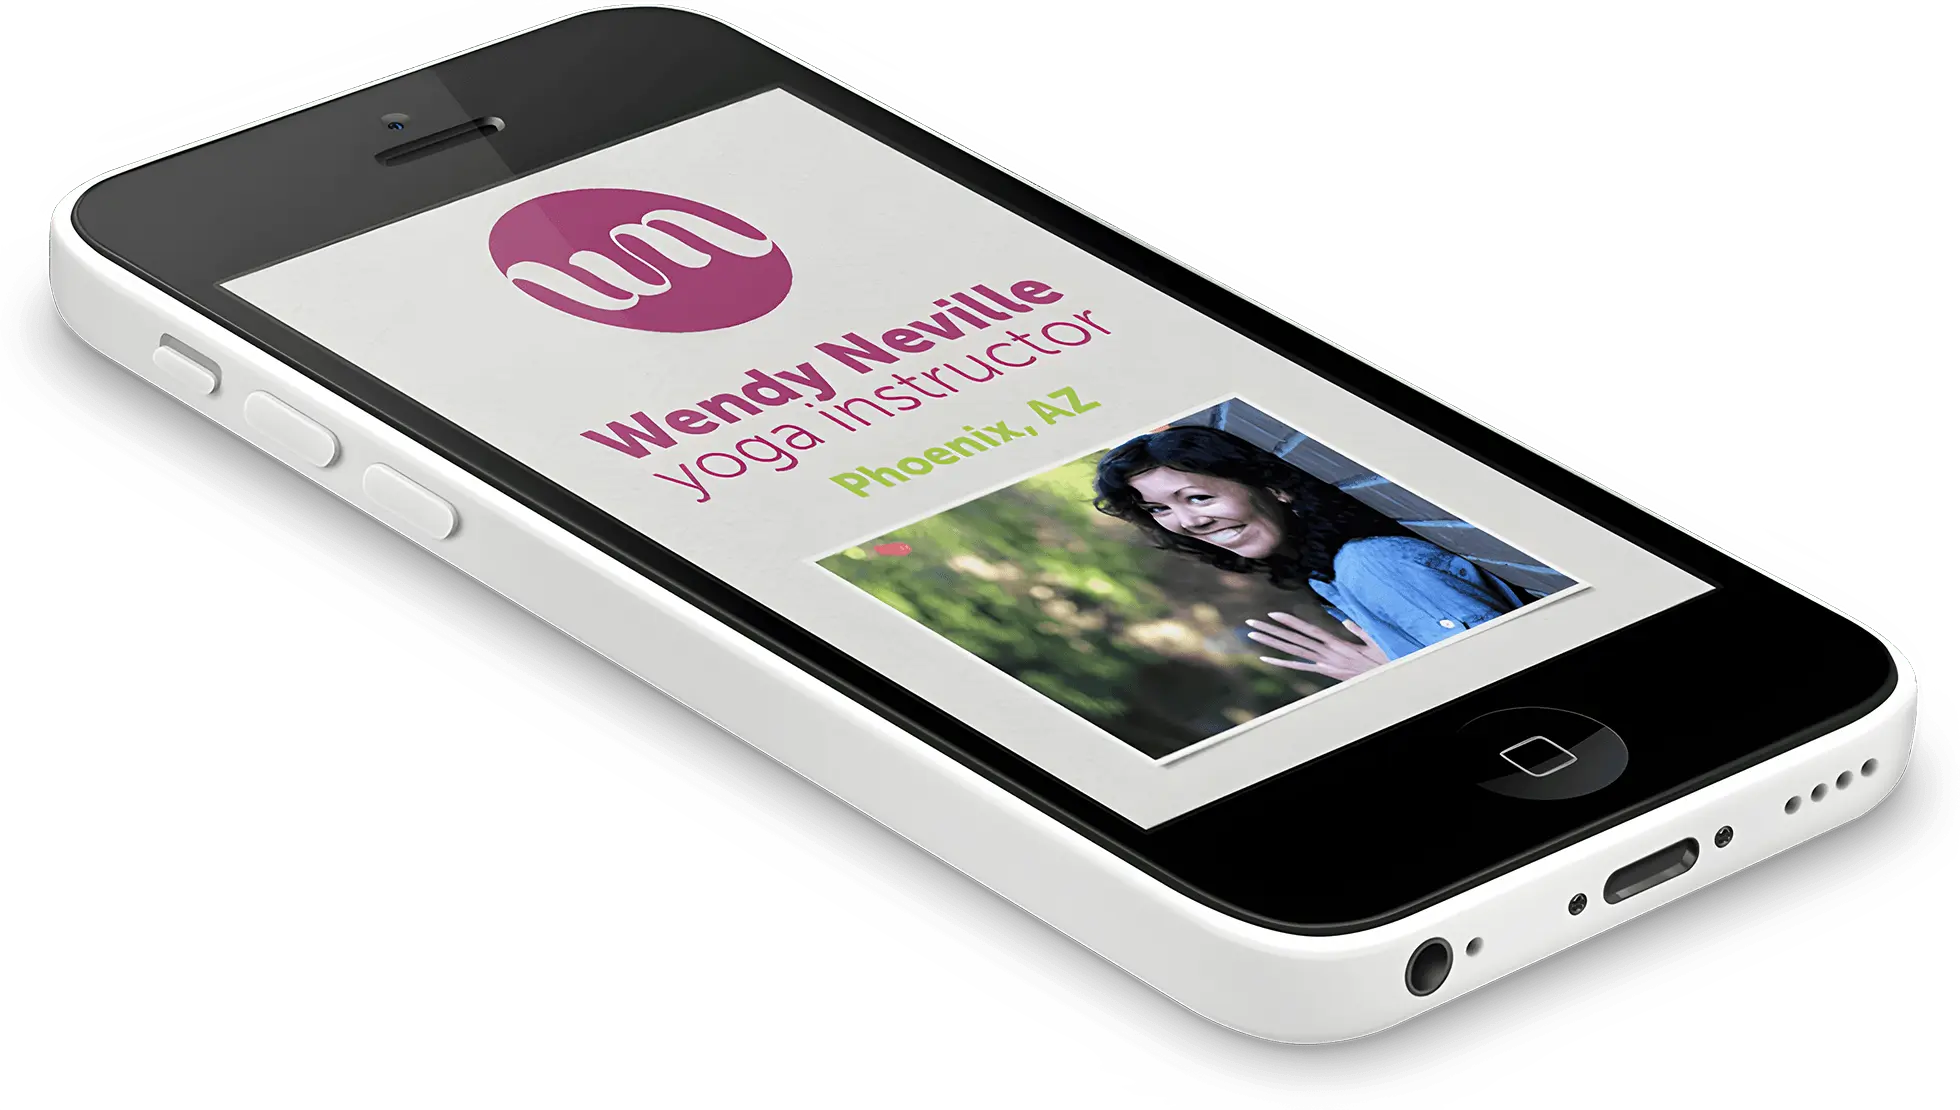 Mobile device showing custom website design.